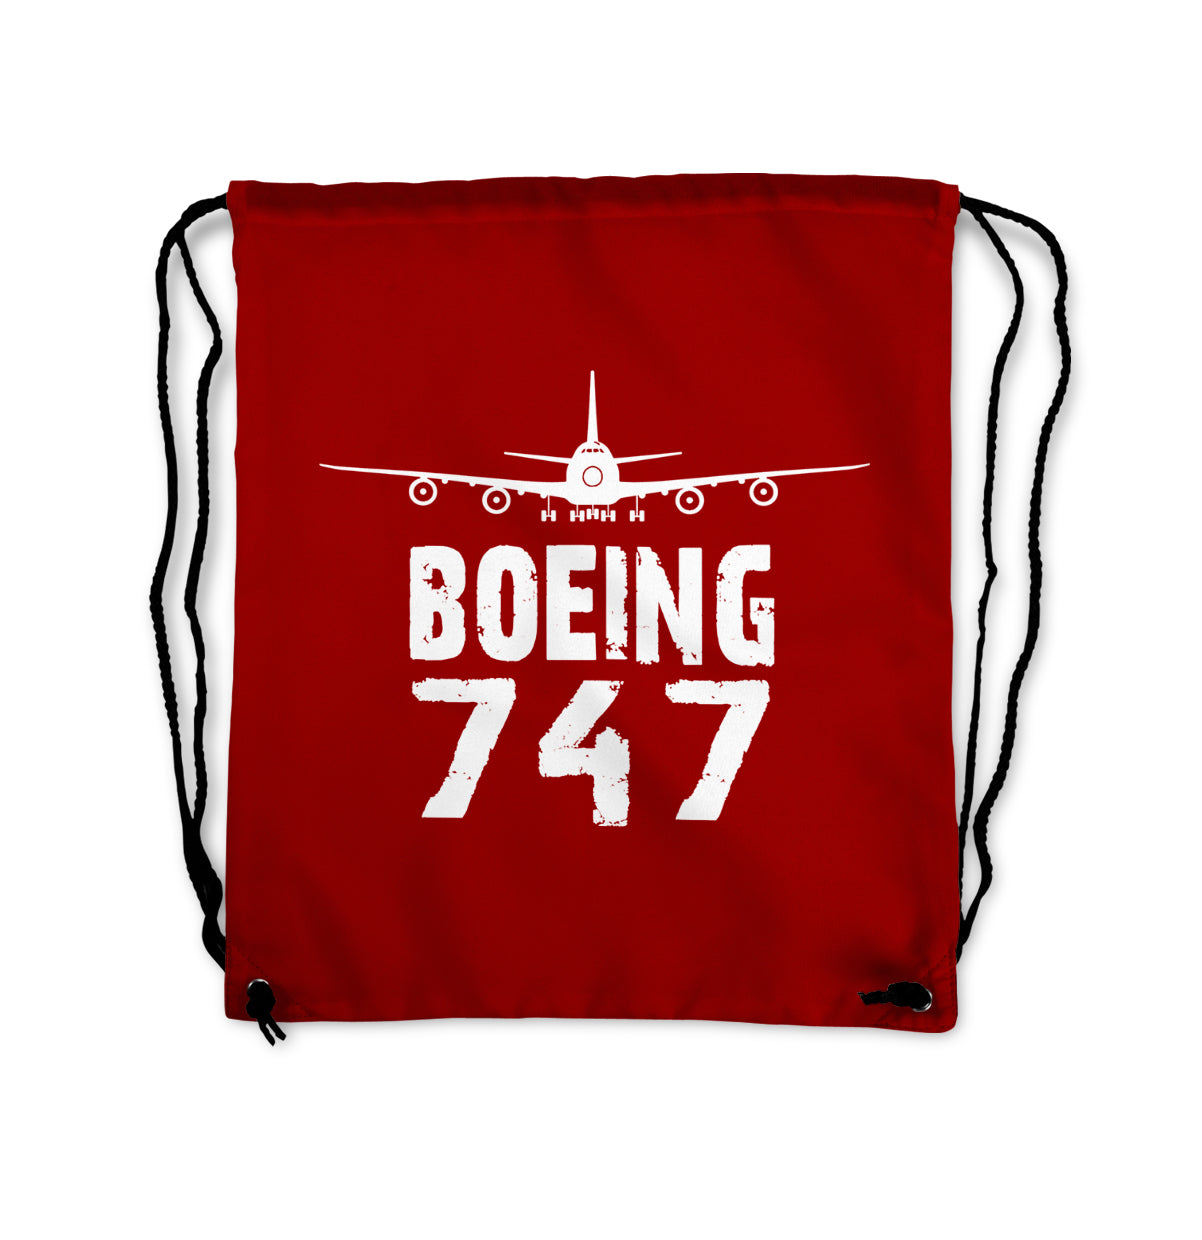 Boeing 747 & Plane Designed Drawstring Bags